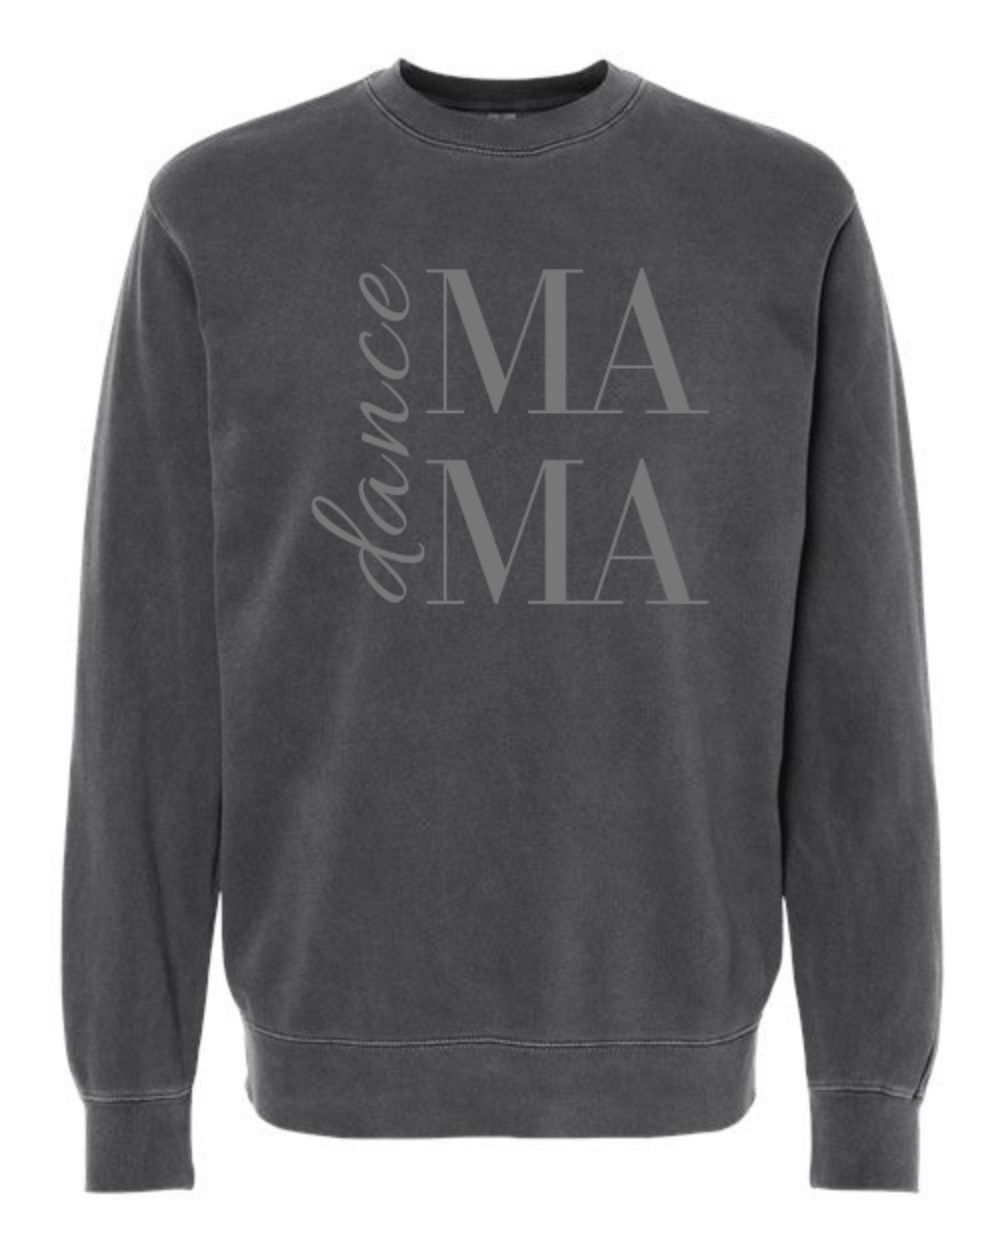 CK Dance MAMA Adult Sweatshirt (Puff Print) - EXTRAS